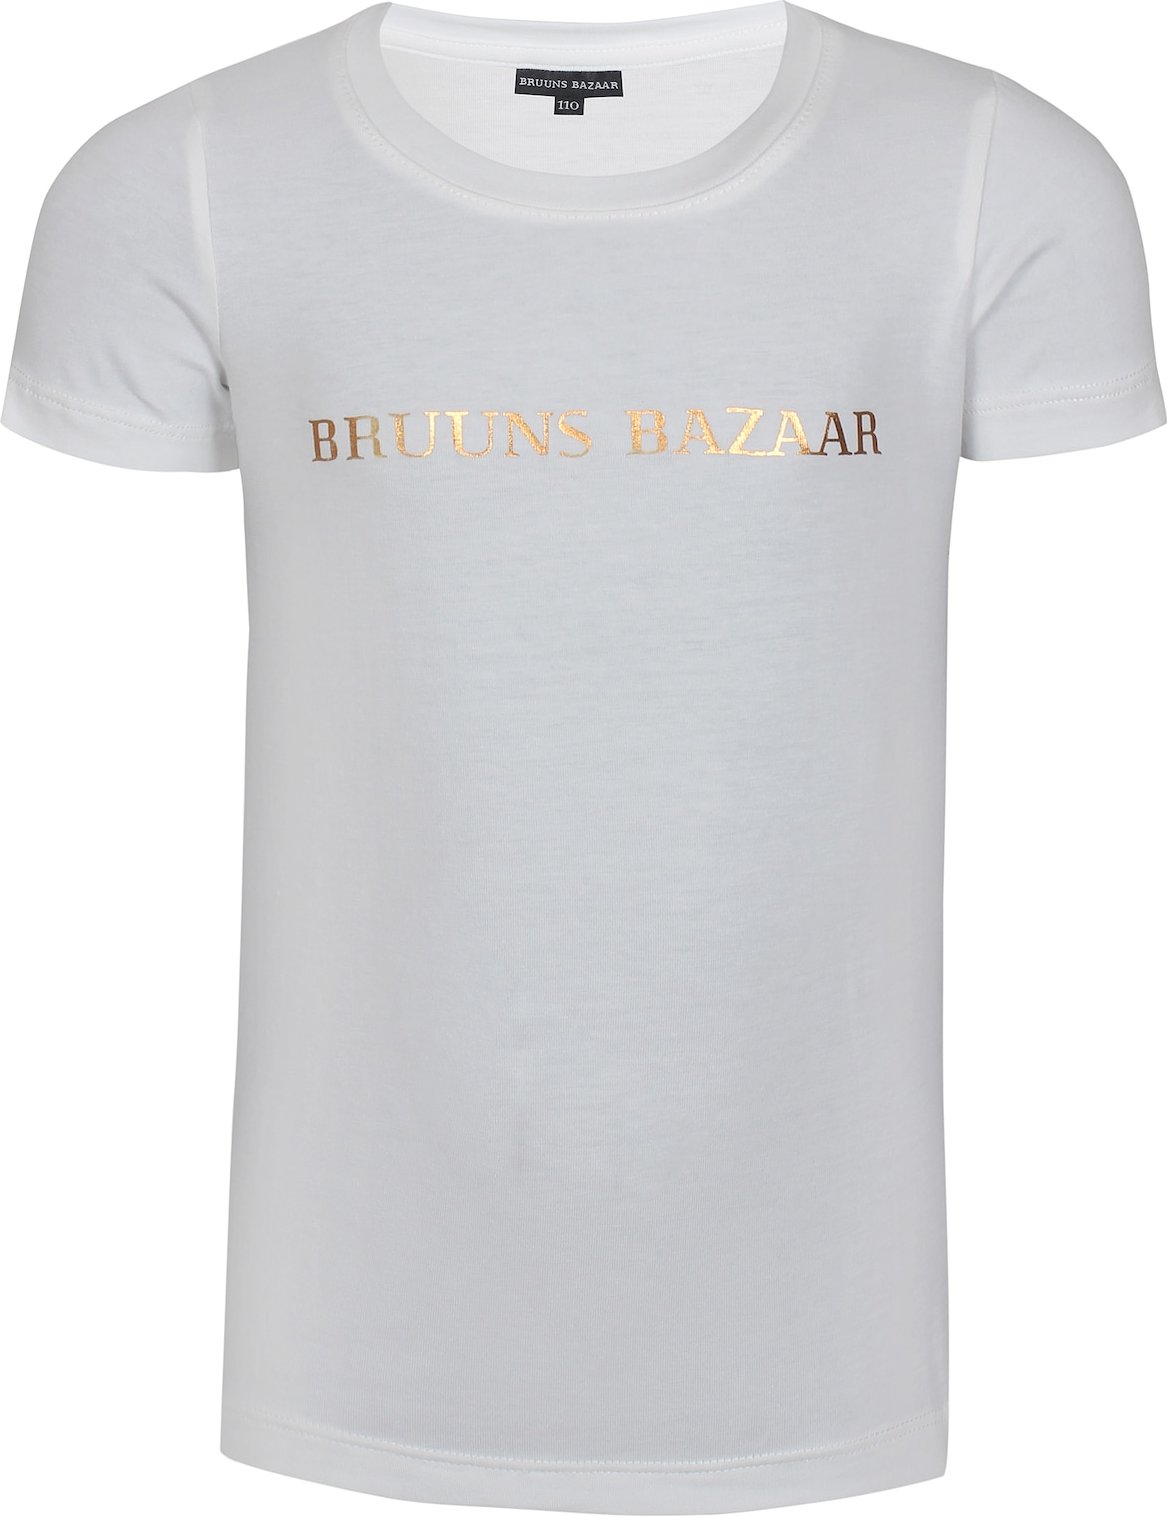 Bruuns Bazaar Kids Tričko zlatá / offwhite